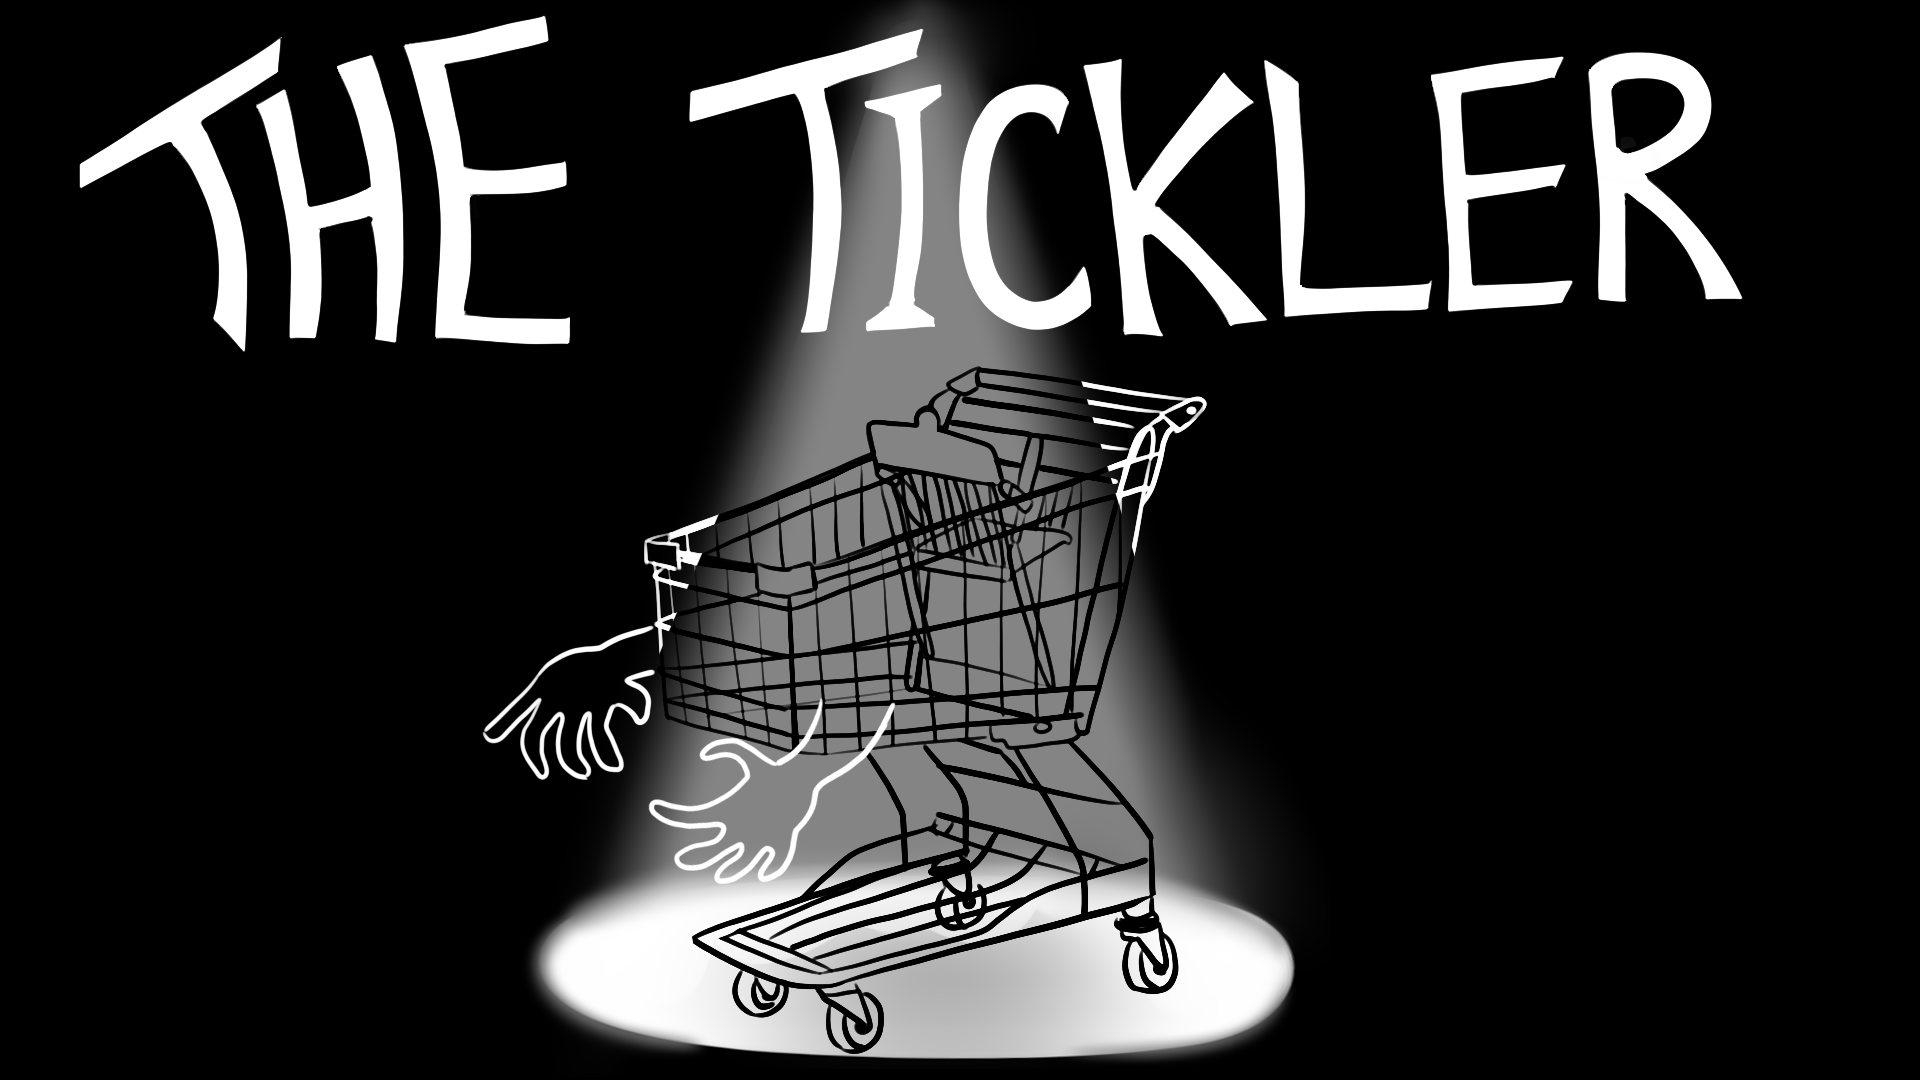 The Tickler